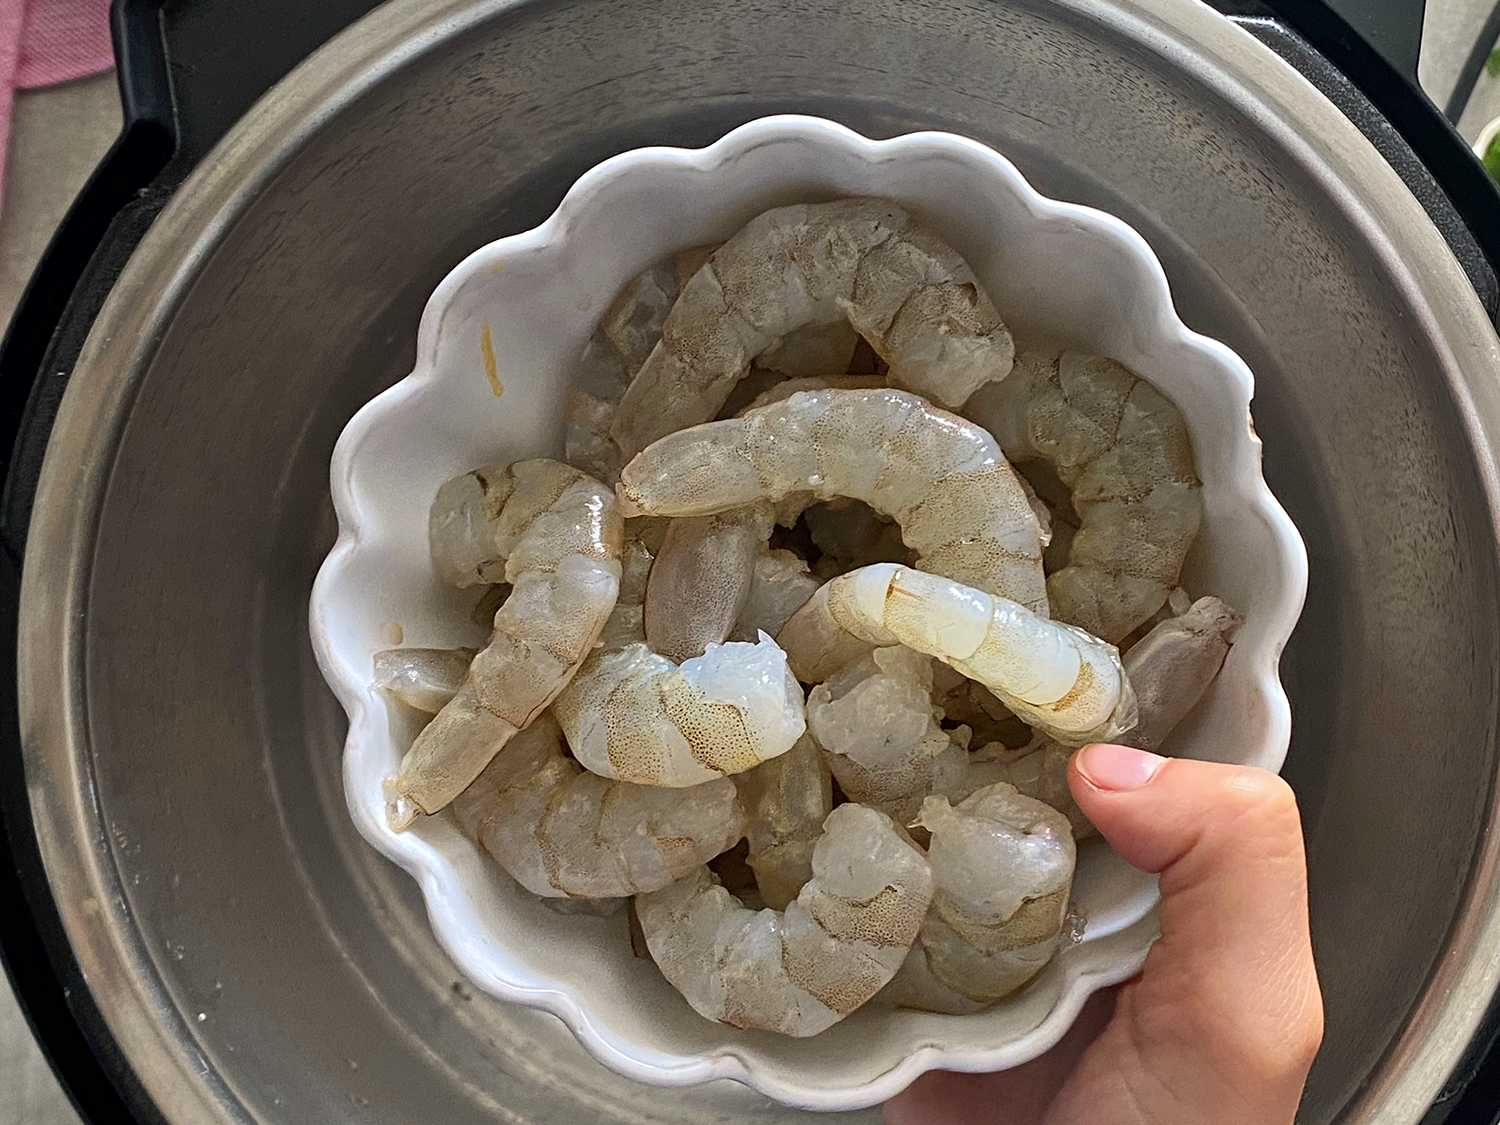 Instant Pot Shrimp Scampi